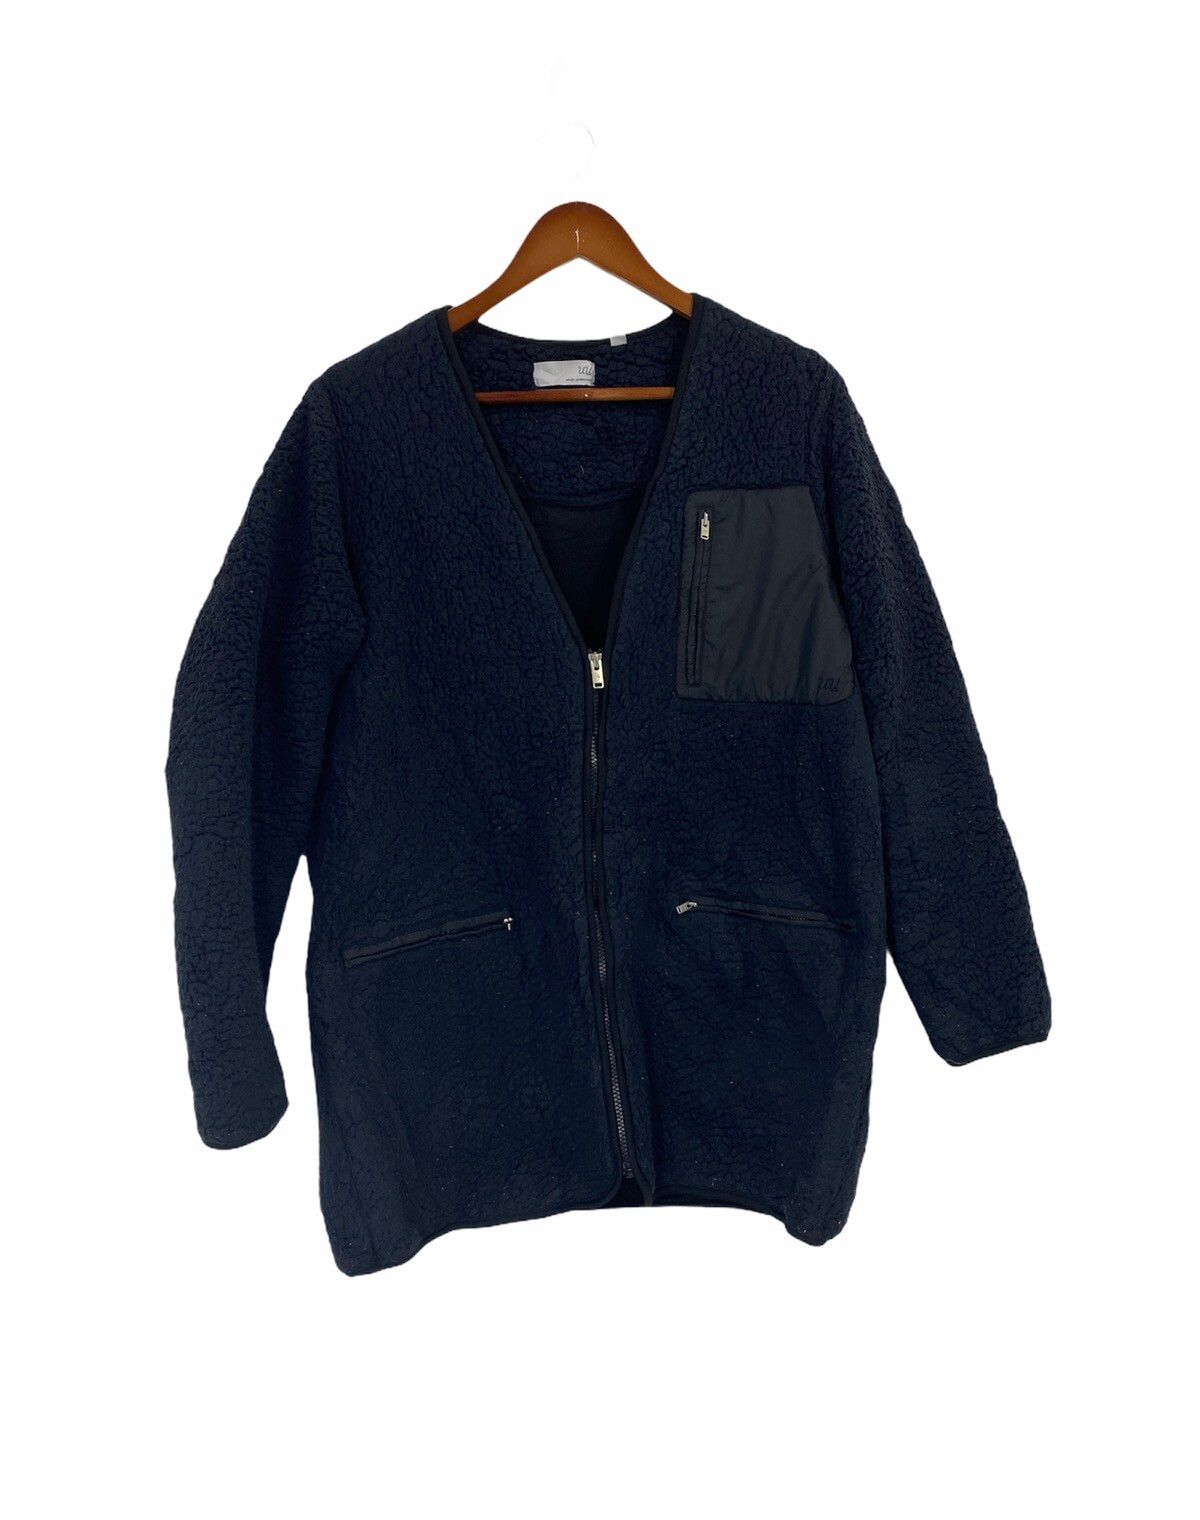 Undercover X Uniqlo Fleece Jacket Nice Design - 1